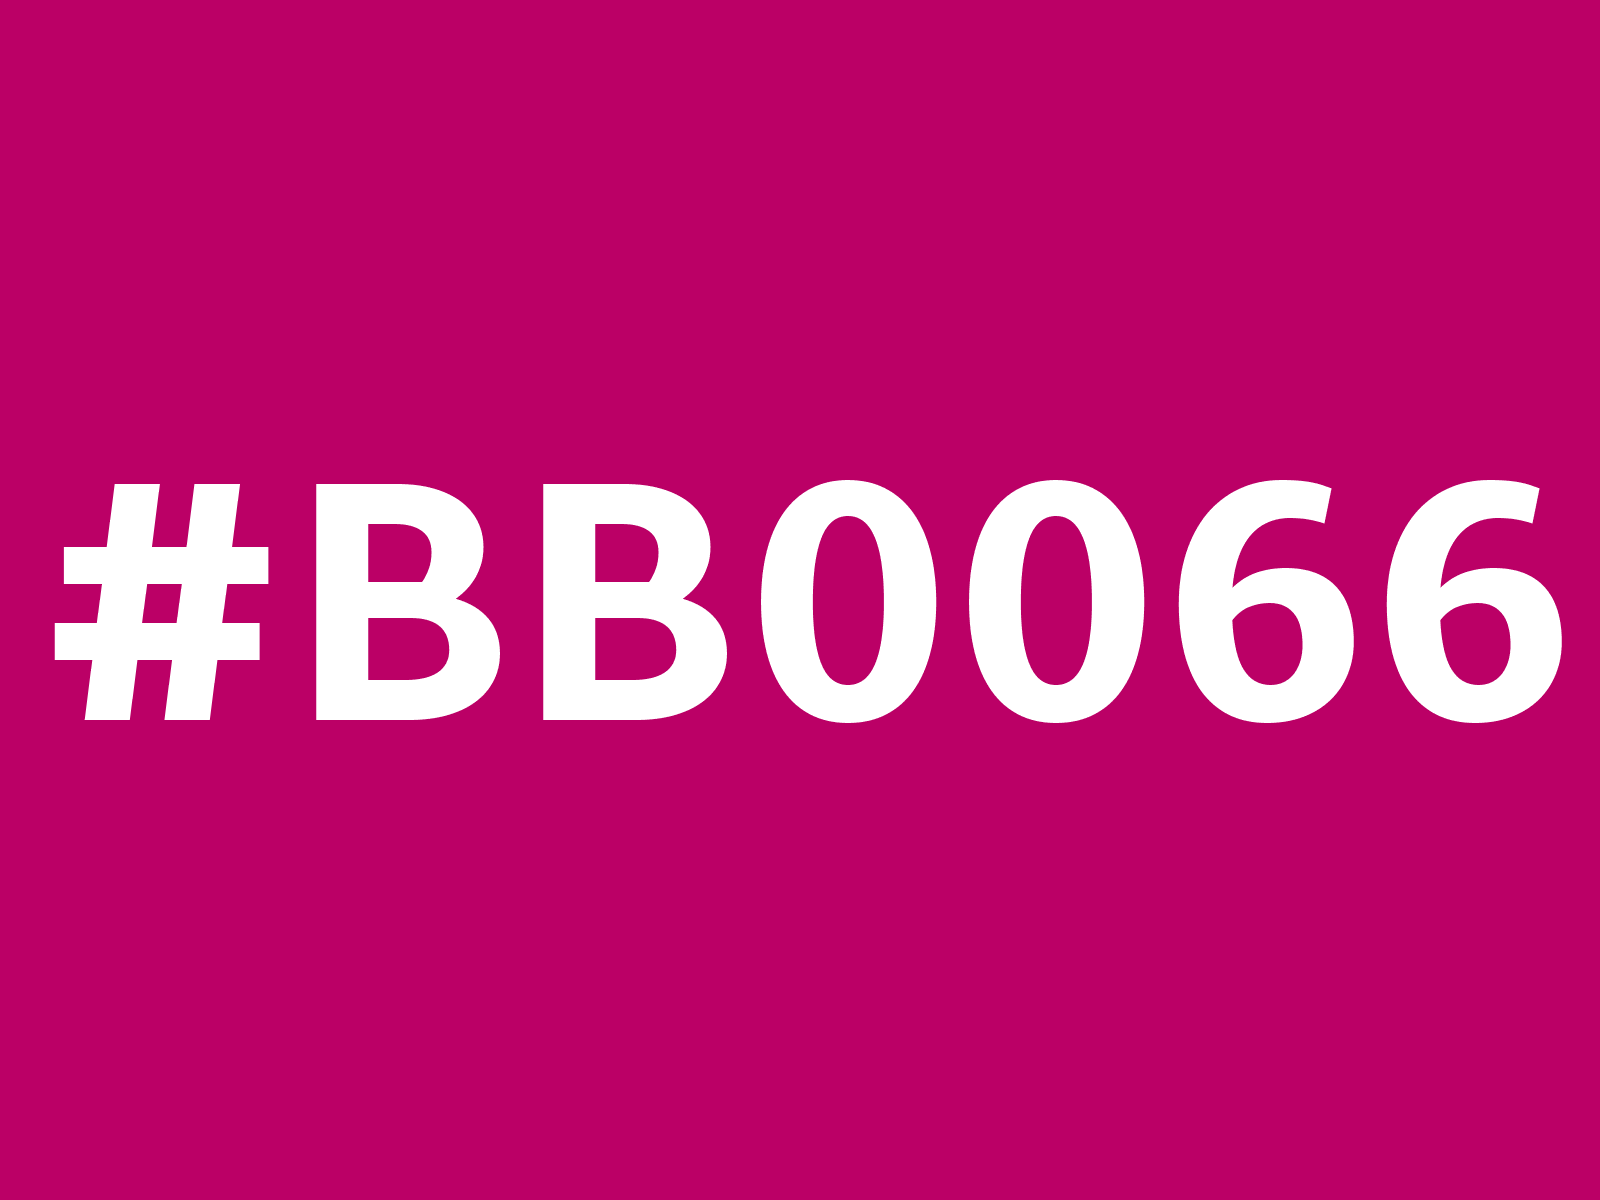 bb0066